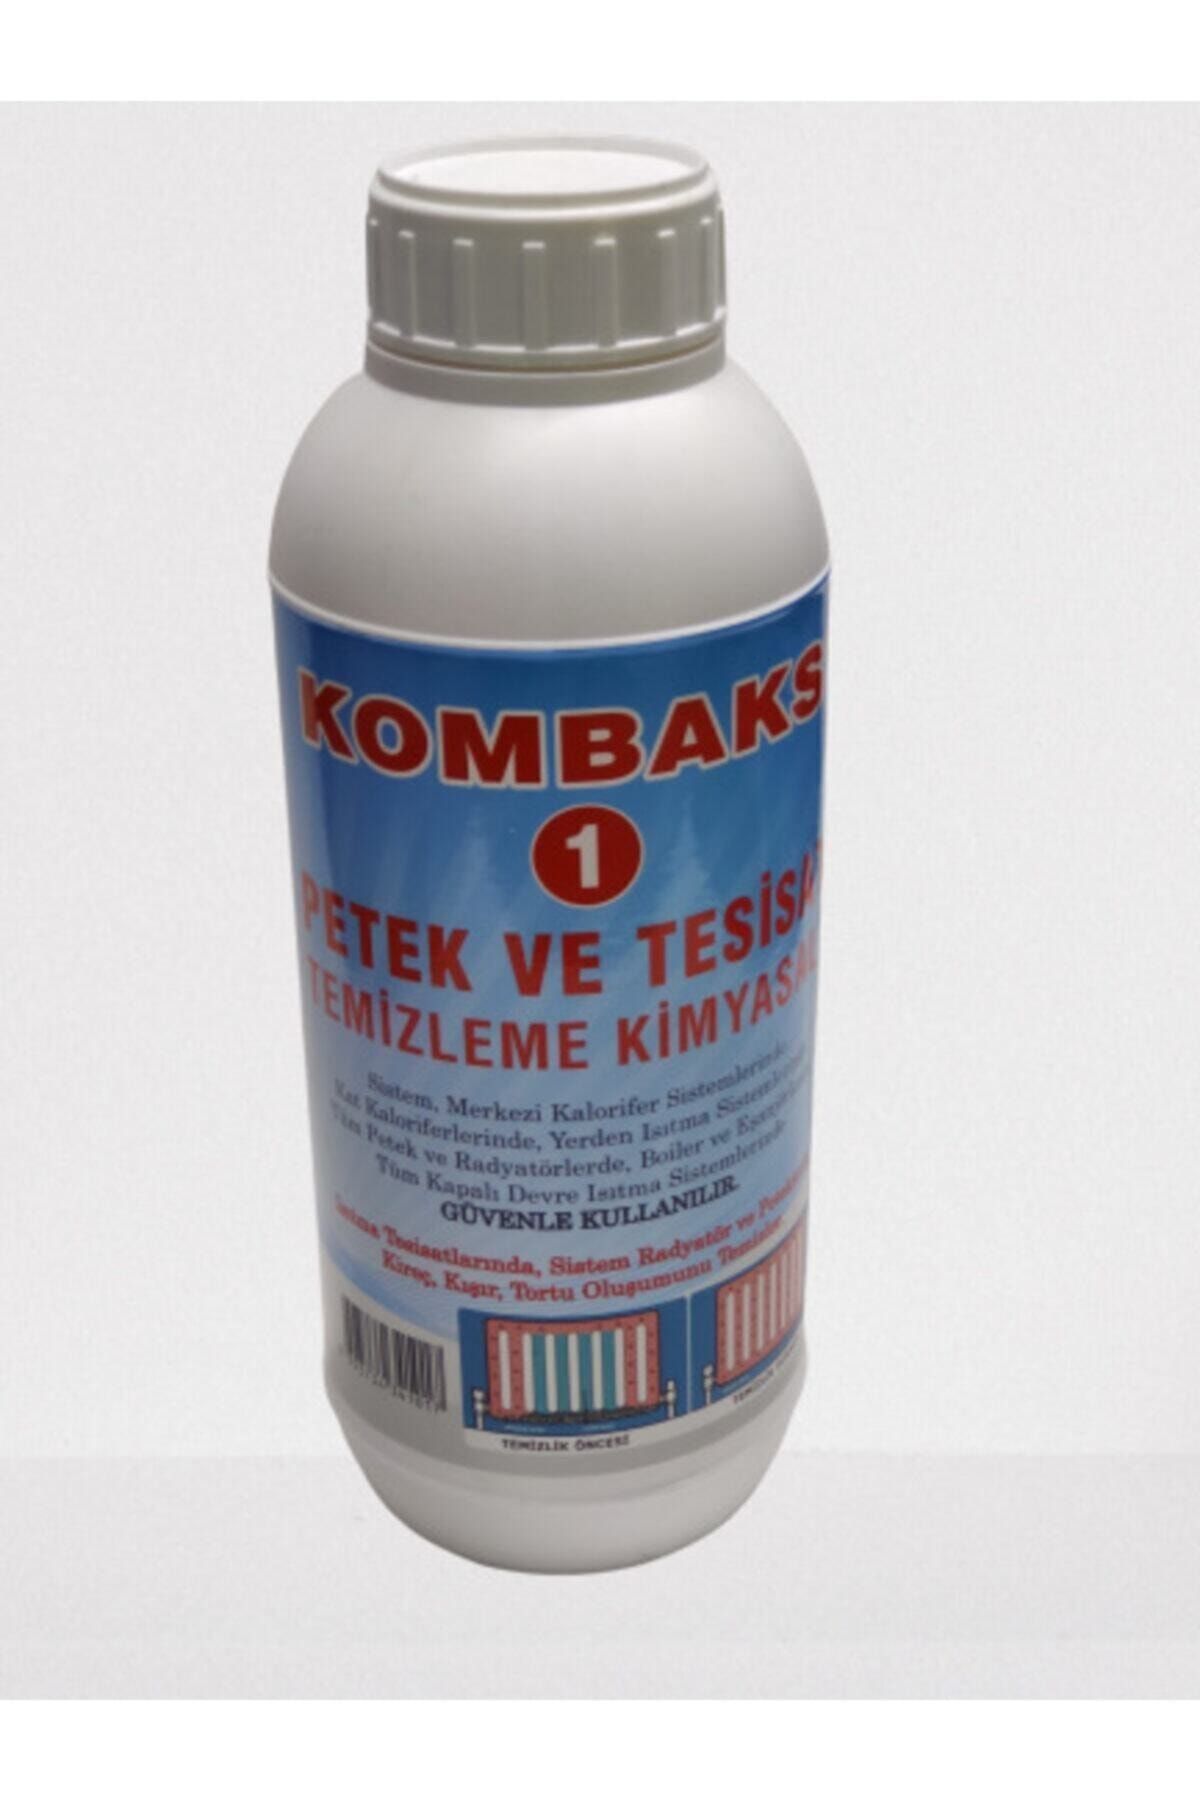 Universal Kombi Petek Temizleme Ilacı ( Kombaks - 1 )